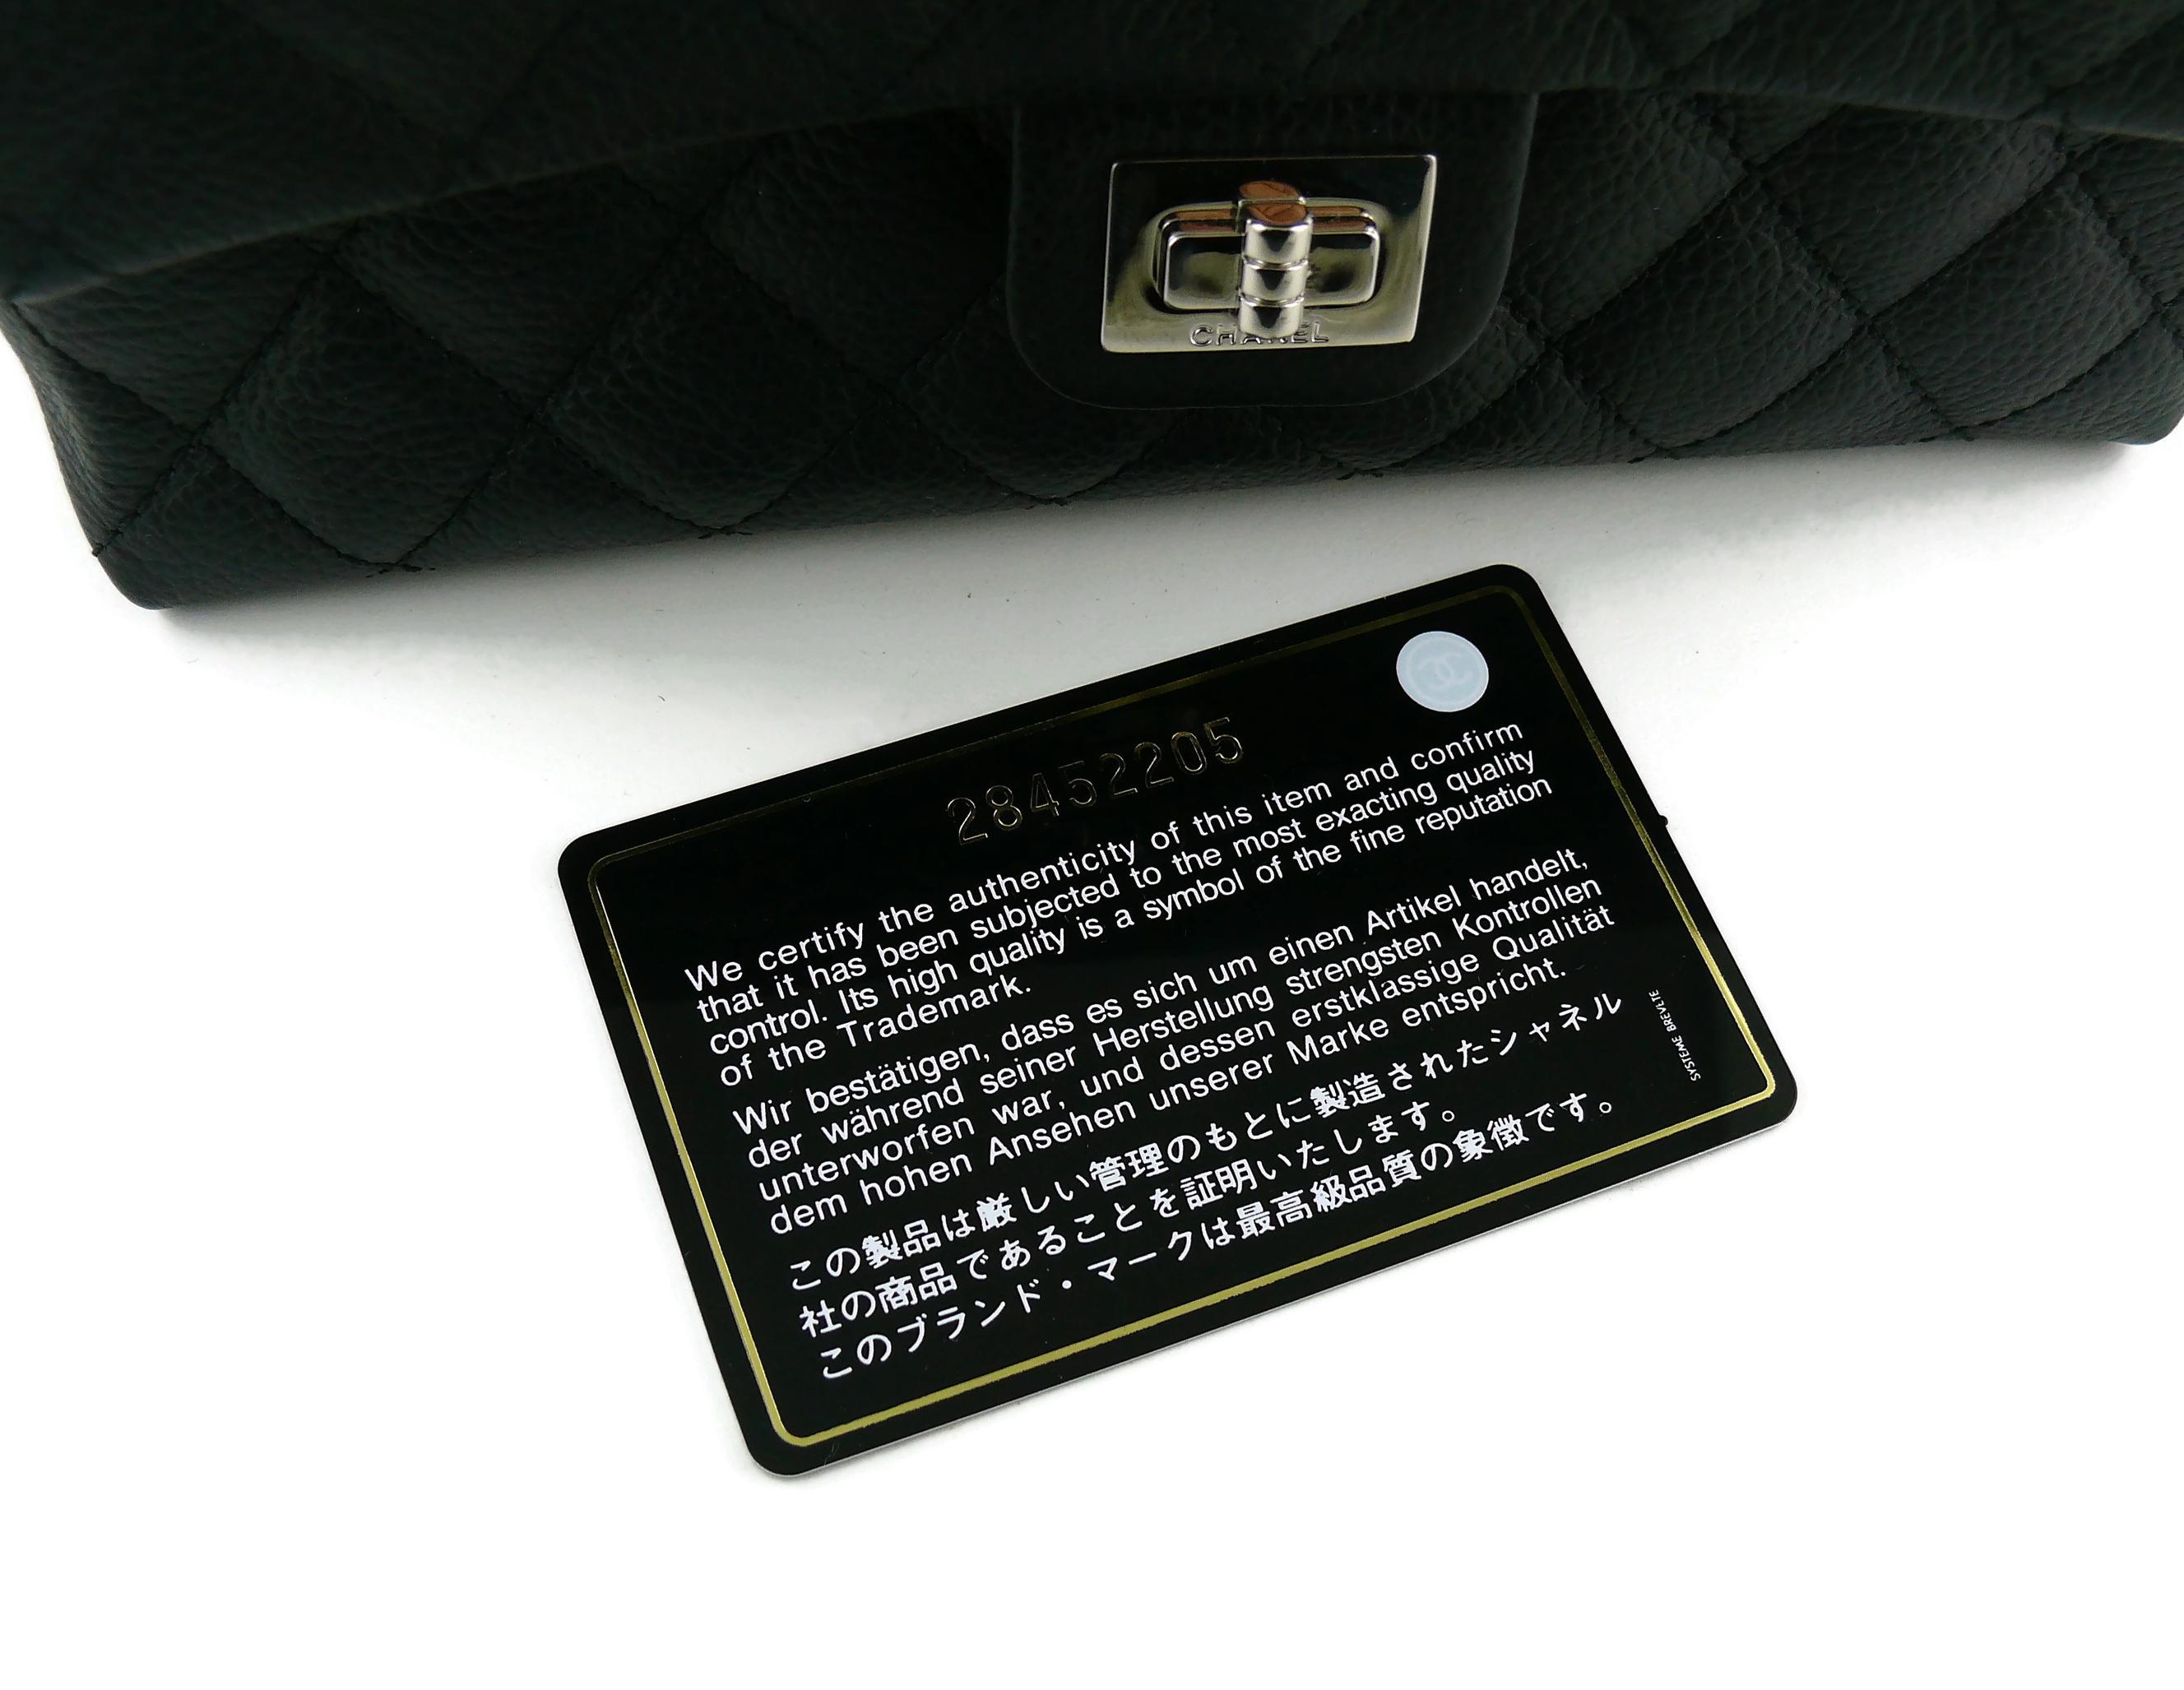 Chanel Uniform Black Quilted Grained Leather Waist-Belt Bag 8